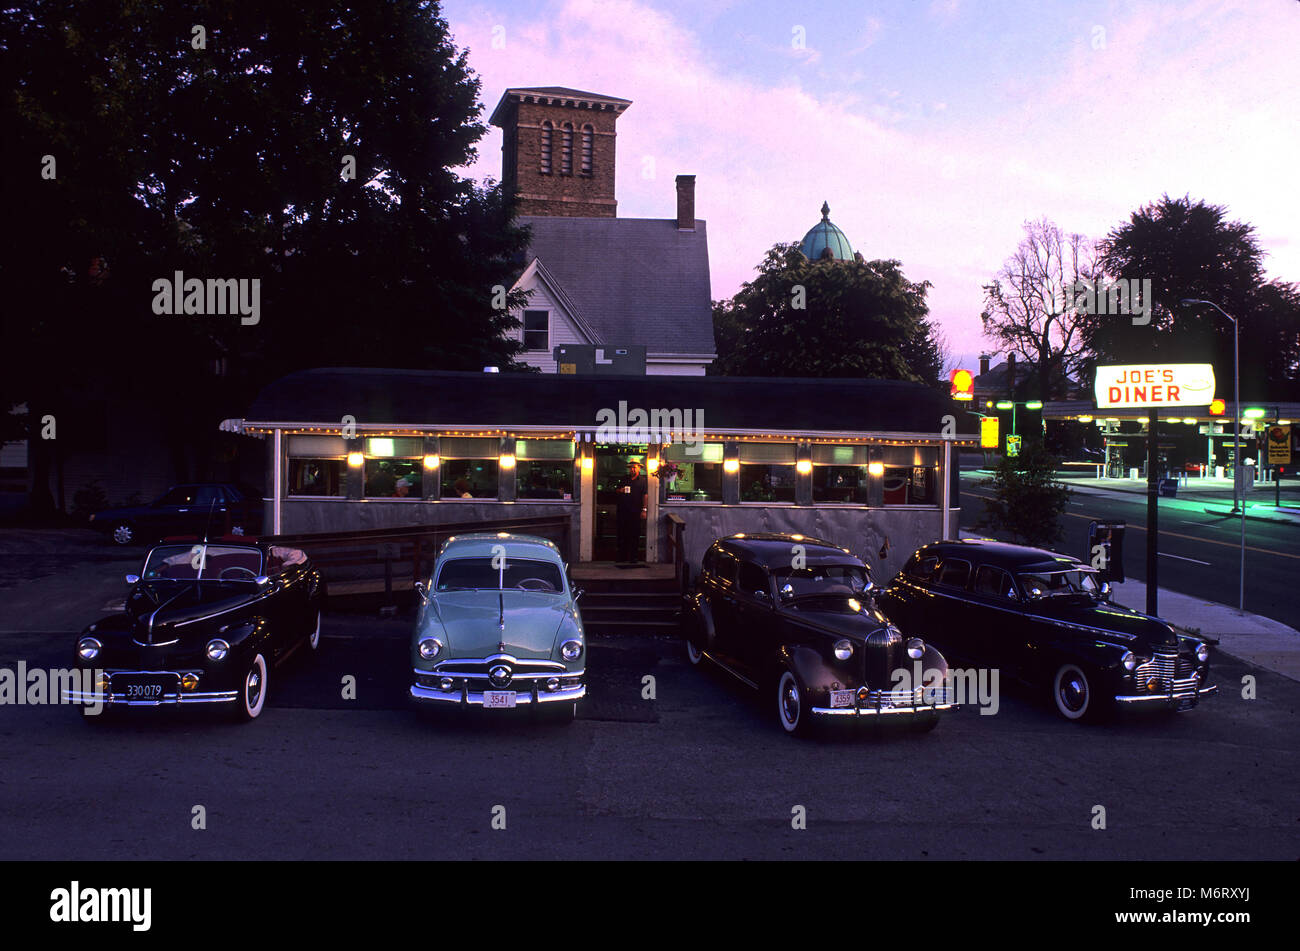 A night photograph of Joe's Diner, Taunton, Massachusetts (USA). Stock Photo